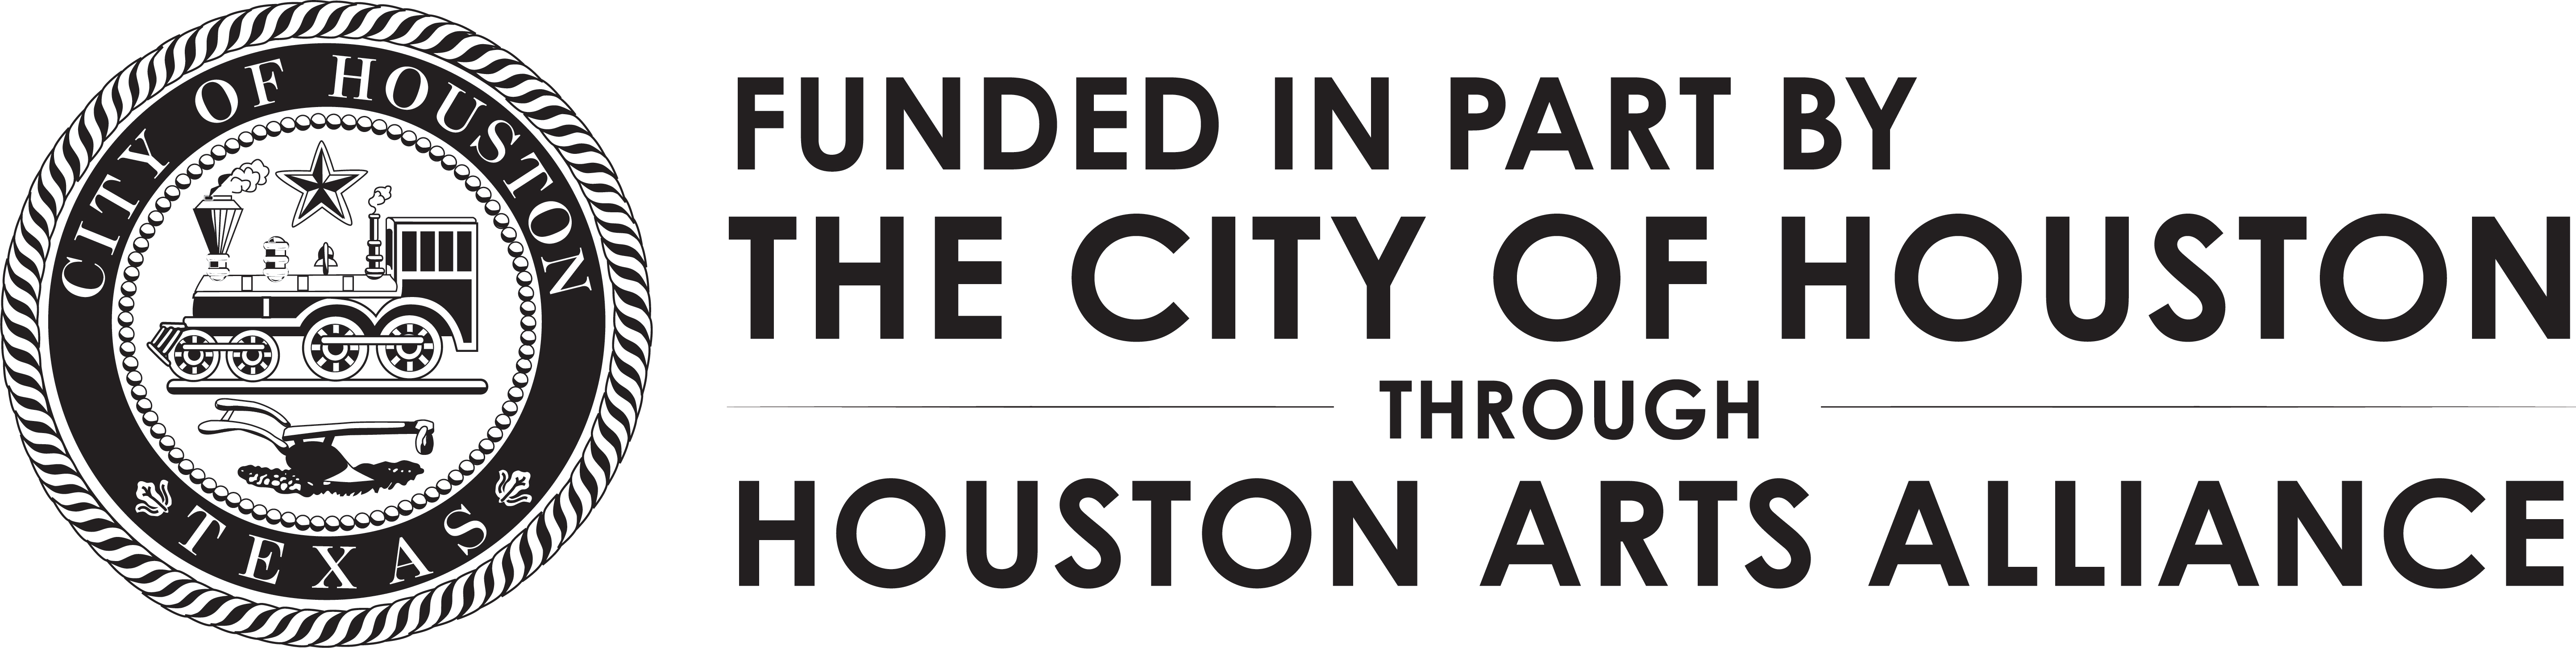 06_City-of-Houston_Houston-Arts-Alliance-Logo